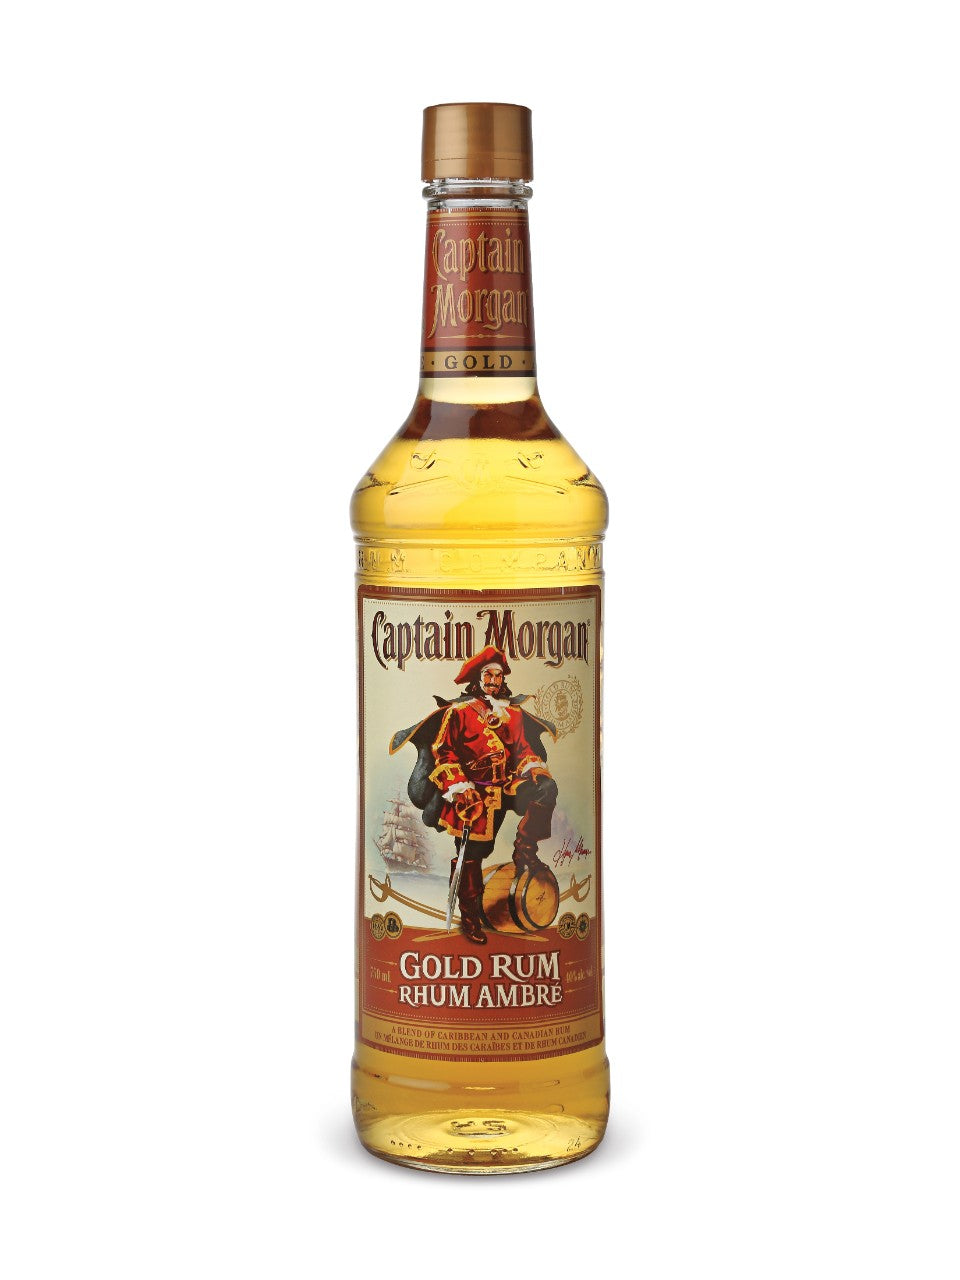 Captain Morgan Gold Rum 750 mL bottle